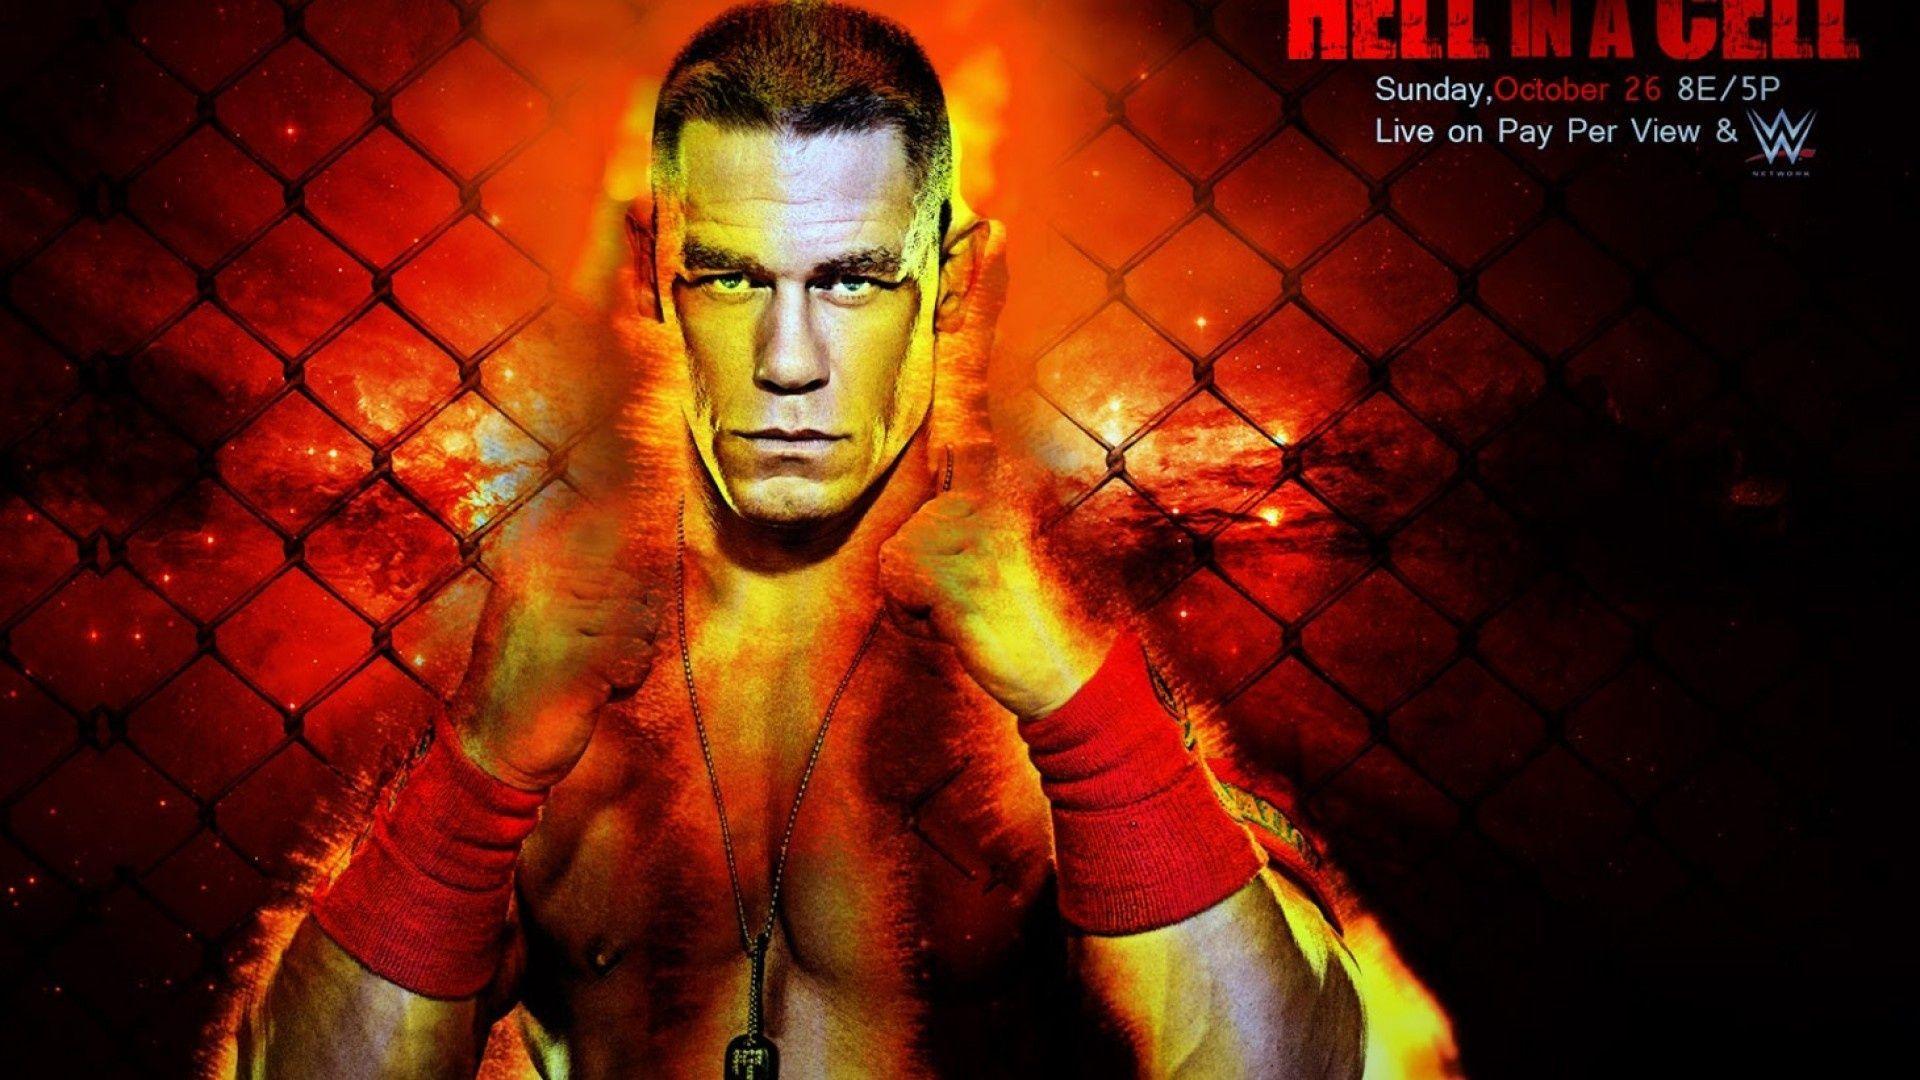 Wwe, Wwf, Wrestling, John Cena, Hell In A Cell